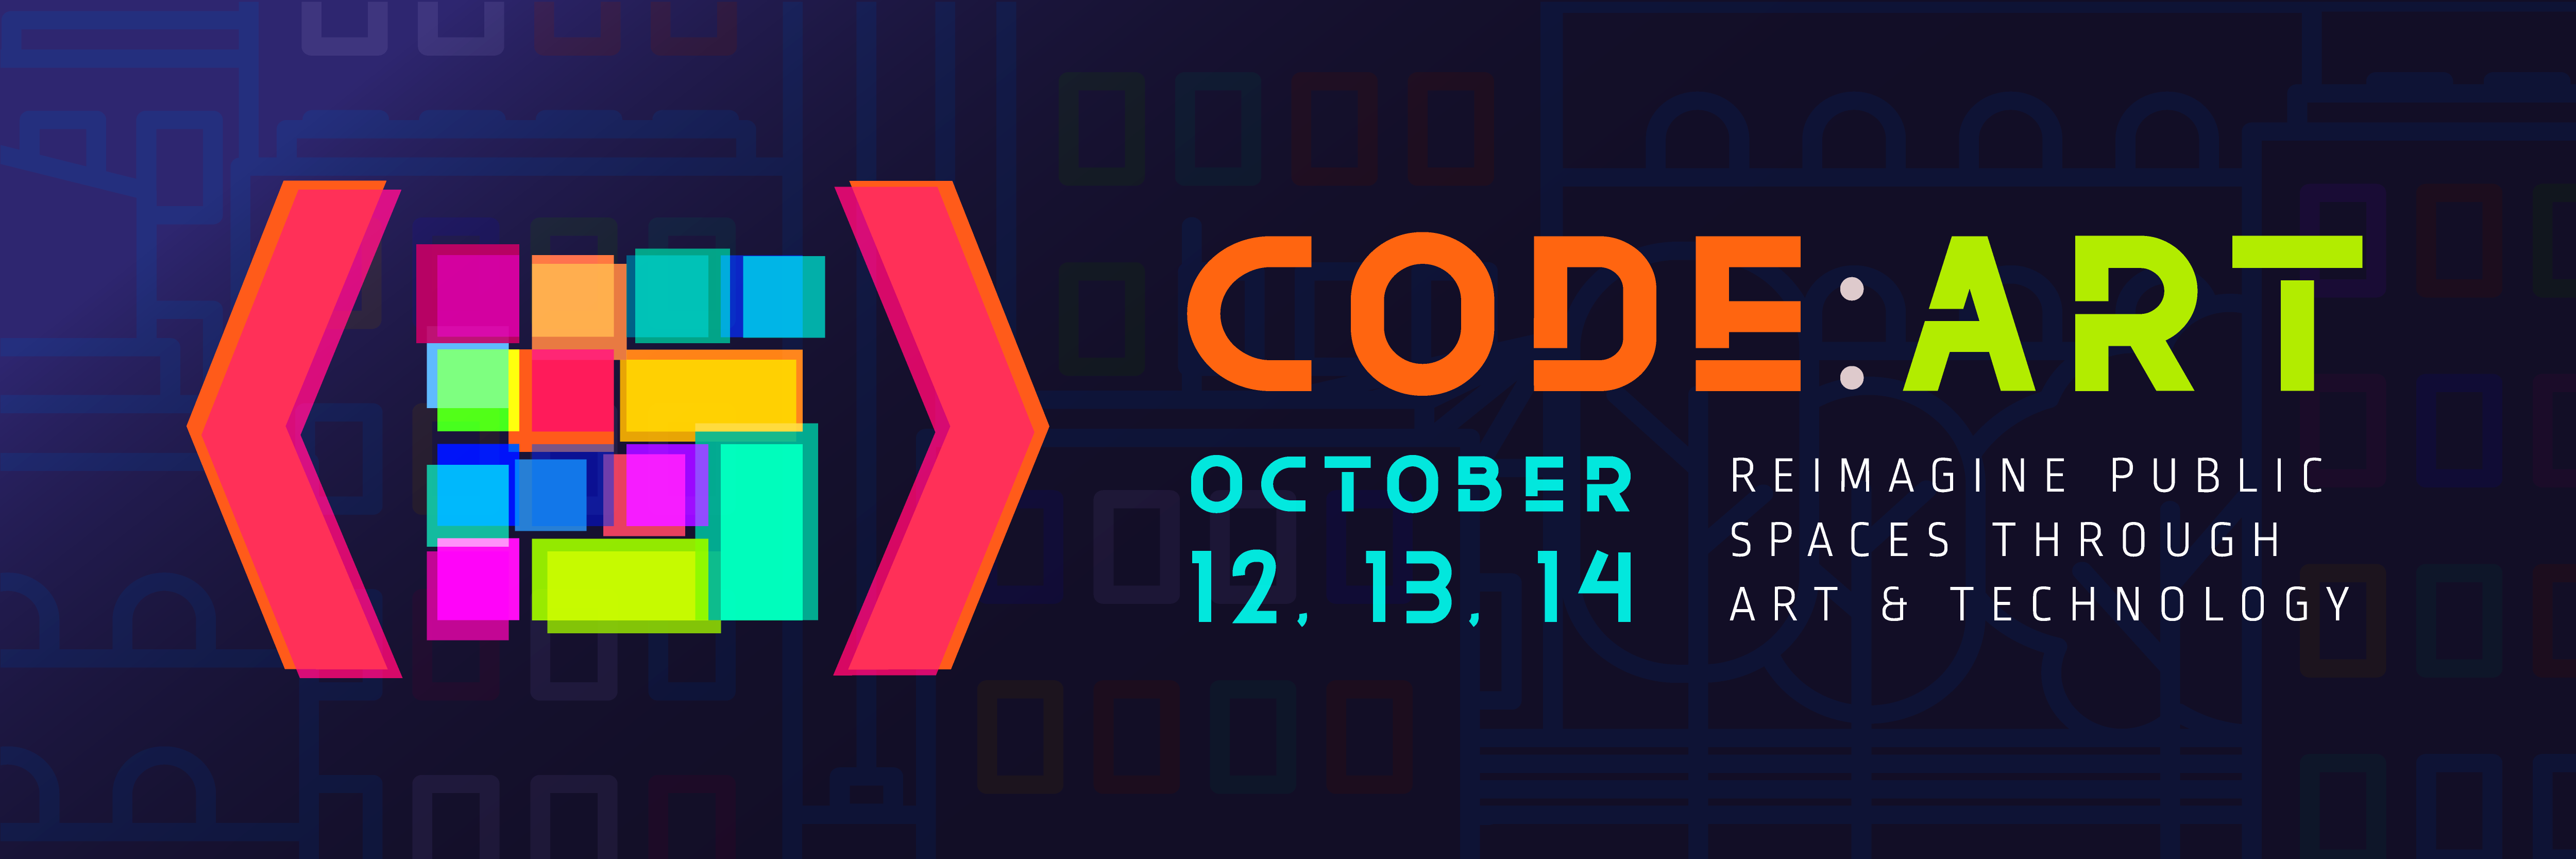 Code Art Banner, October 12,13,14, Reimagine Public Spaces through Art and Technology